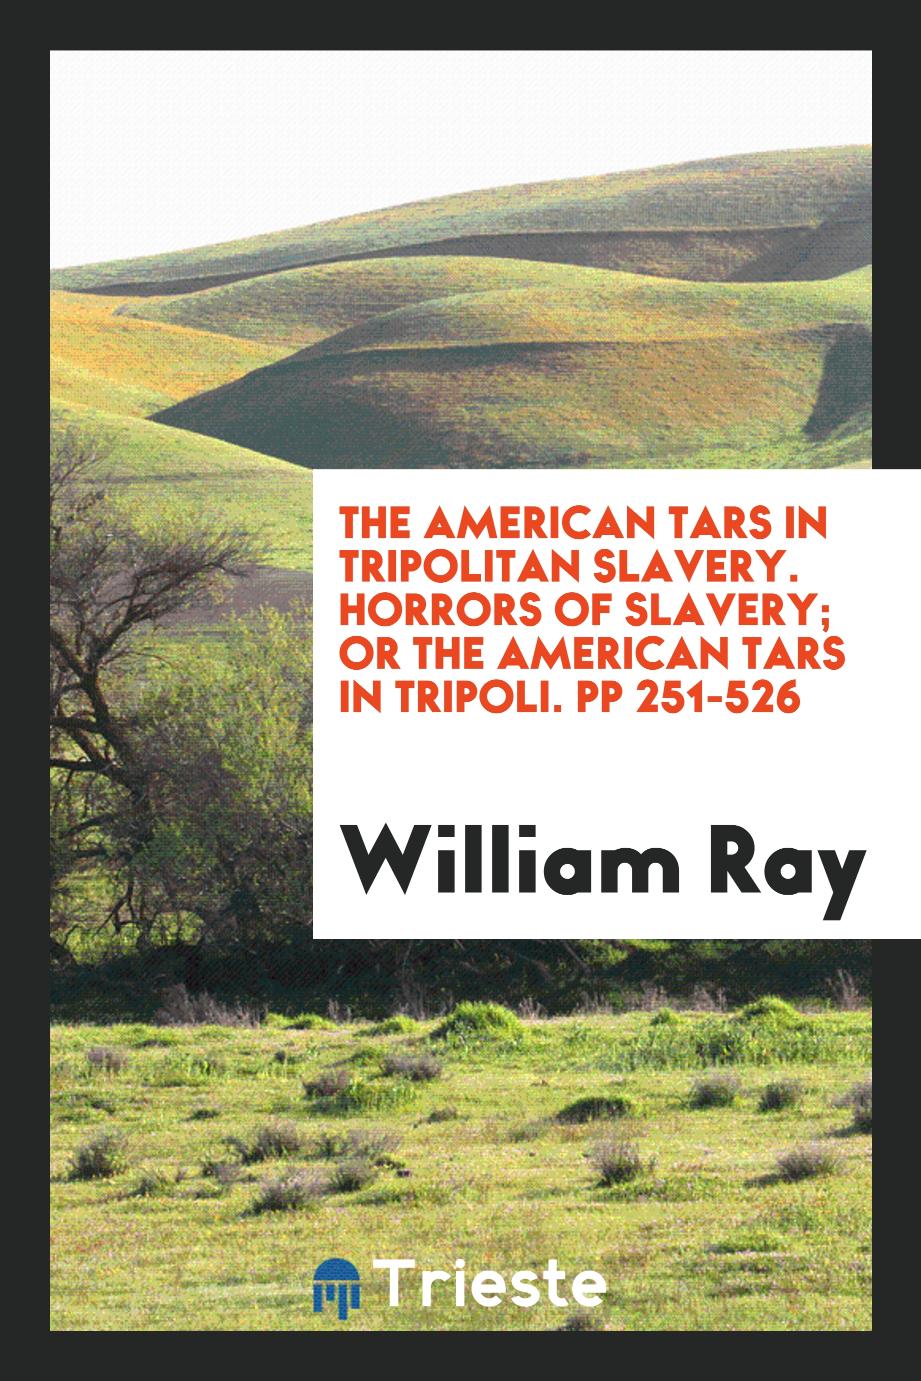 The American tars in Tripolitan slavery. Horrors of Slavery; or the American tars in Tripoli. pp 251-526